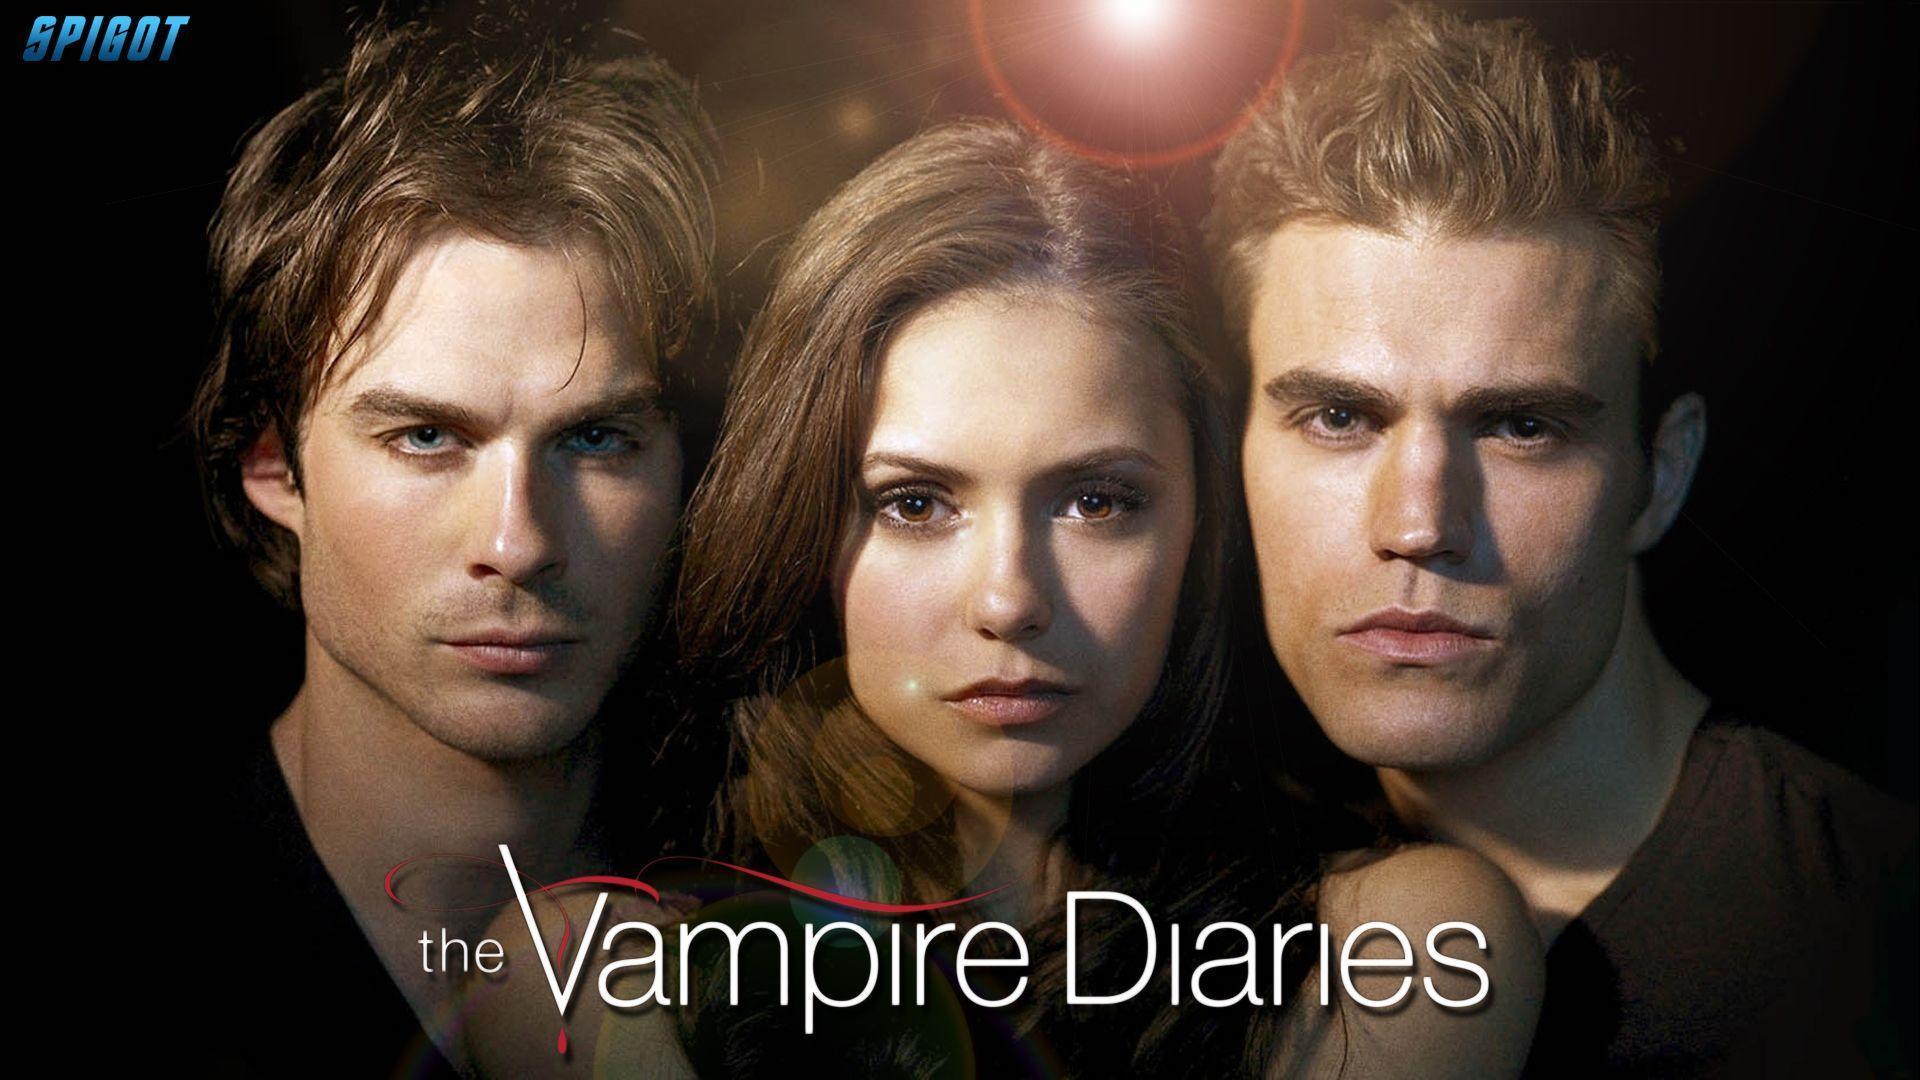 Paul Wesley Vampire Diaries Wallpaper